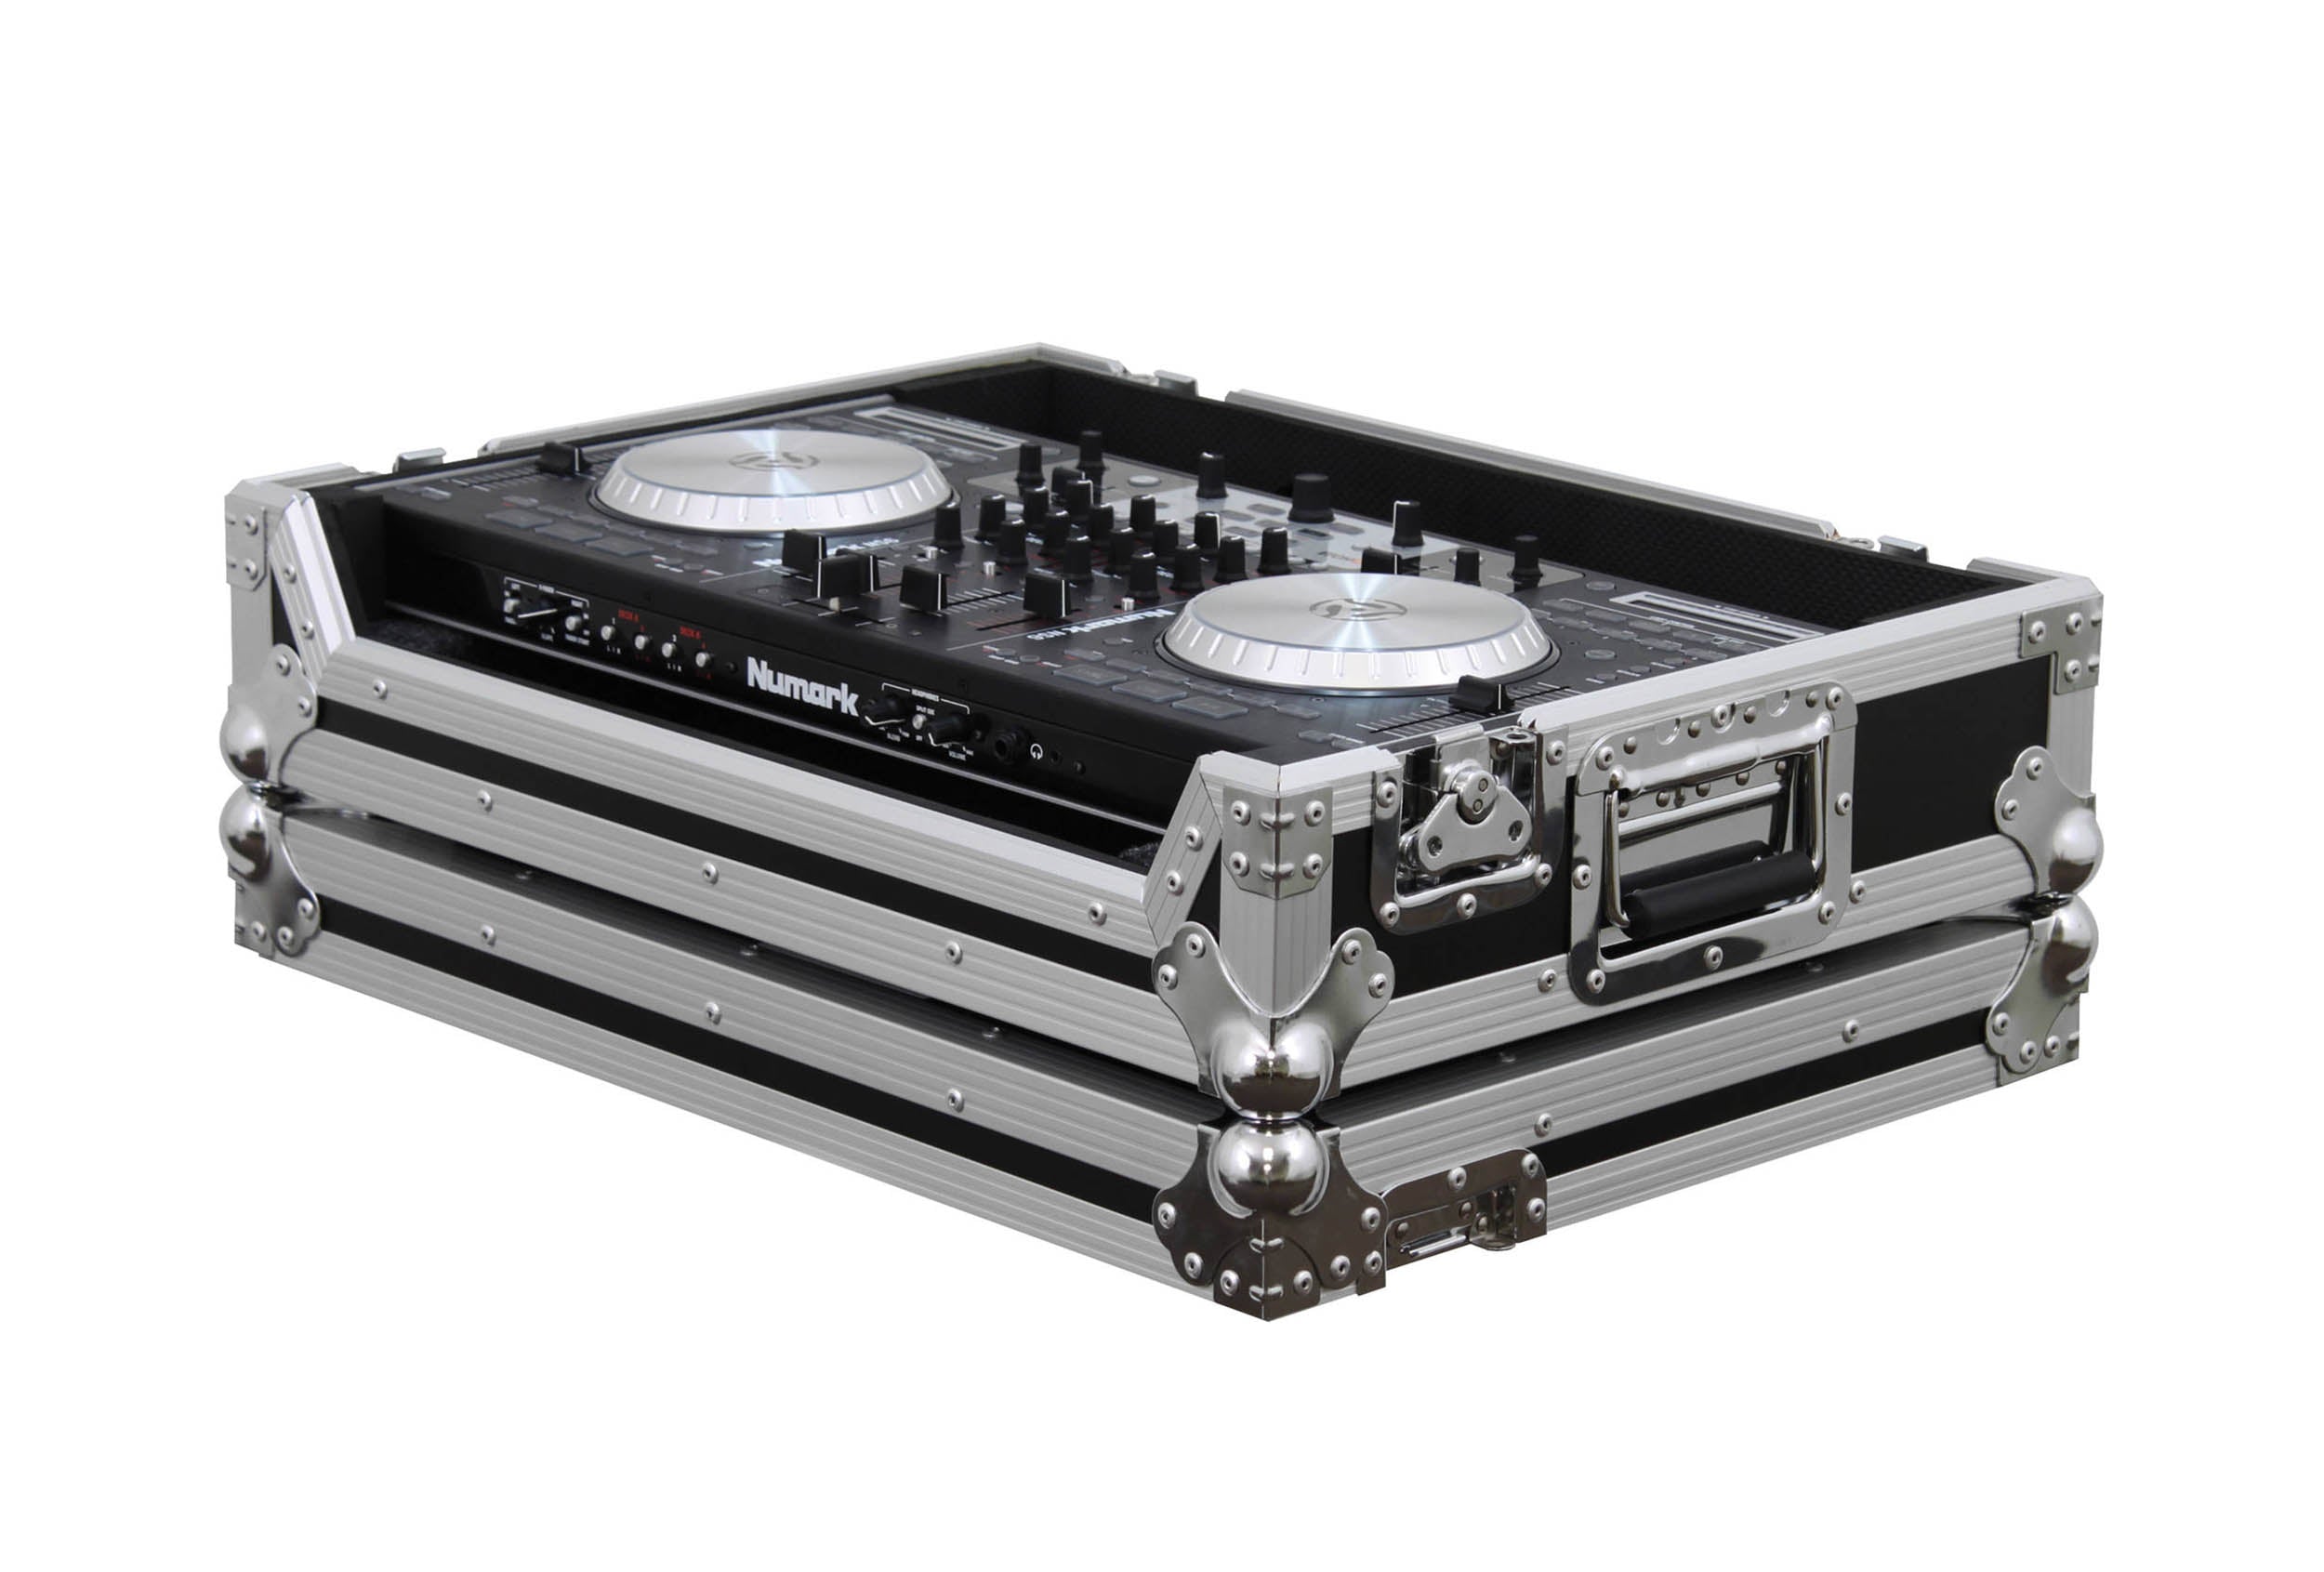 Odyssey FRNS6 Numark NS6 DJ MIDI Controller Flight Case in Black and Chrome